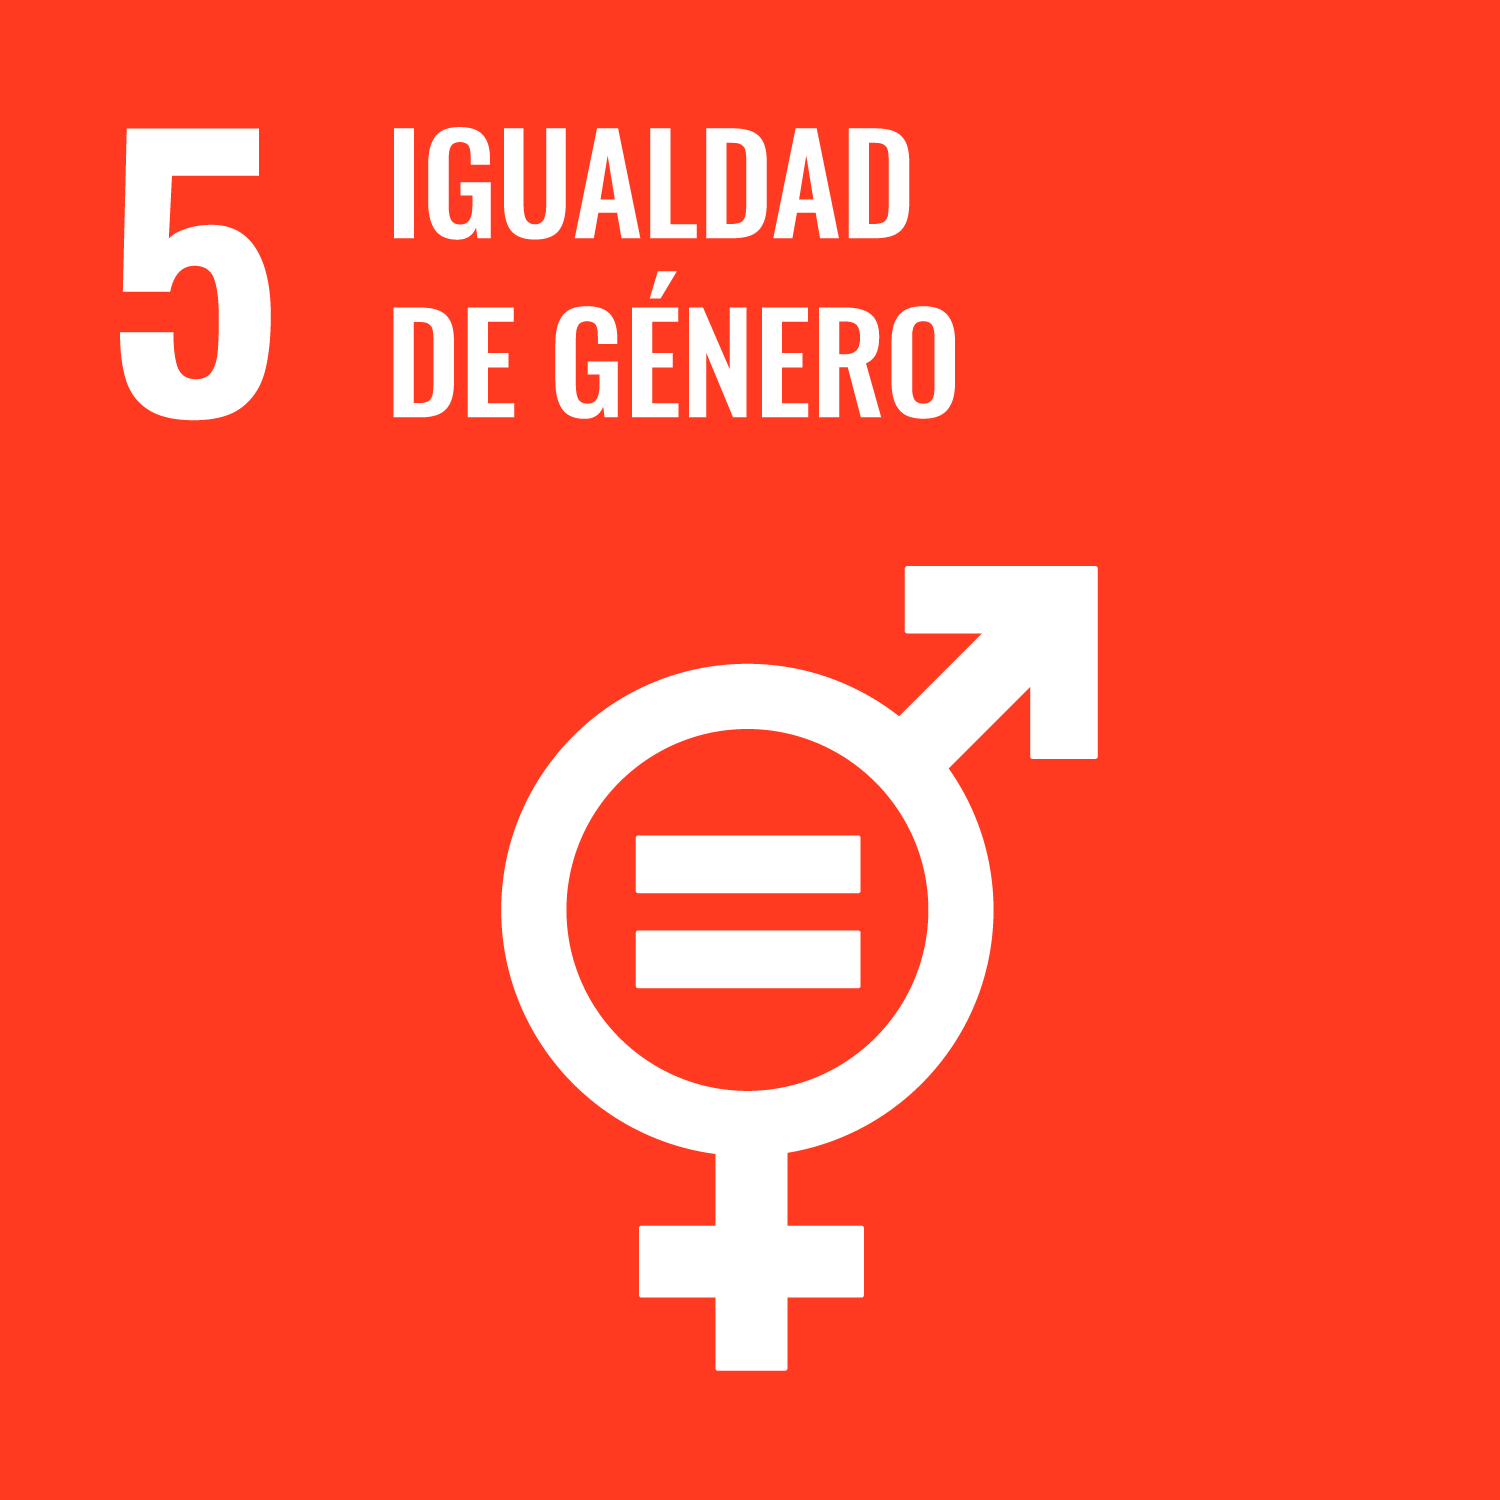 ODS 5</p>
<h5>Igualdad de género</h5>
<p>